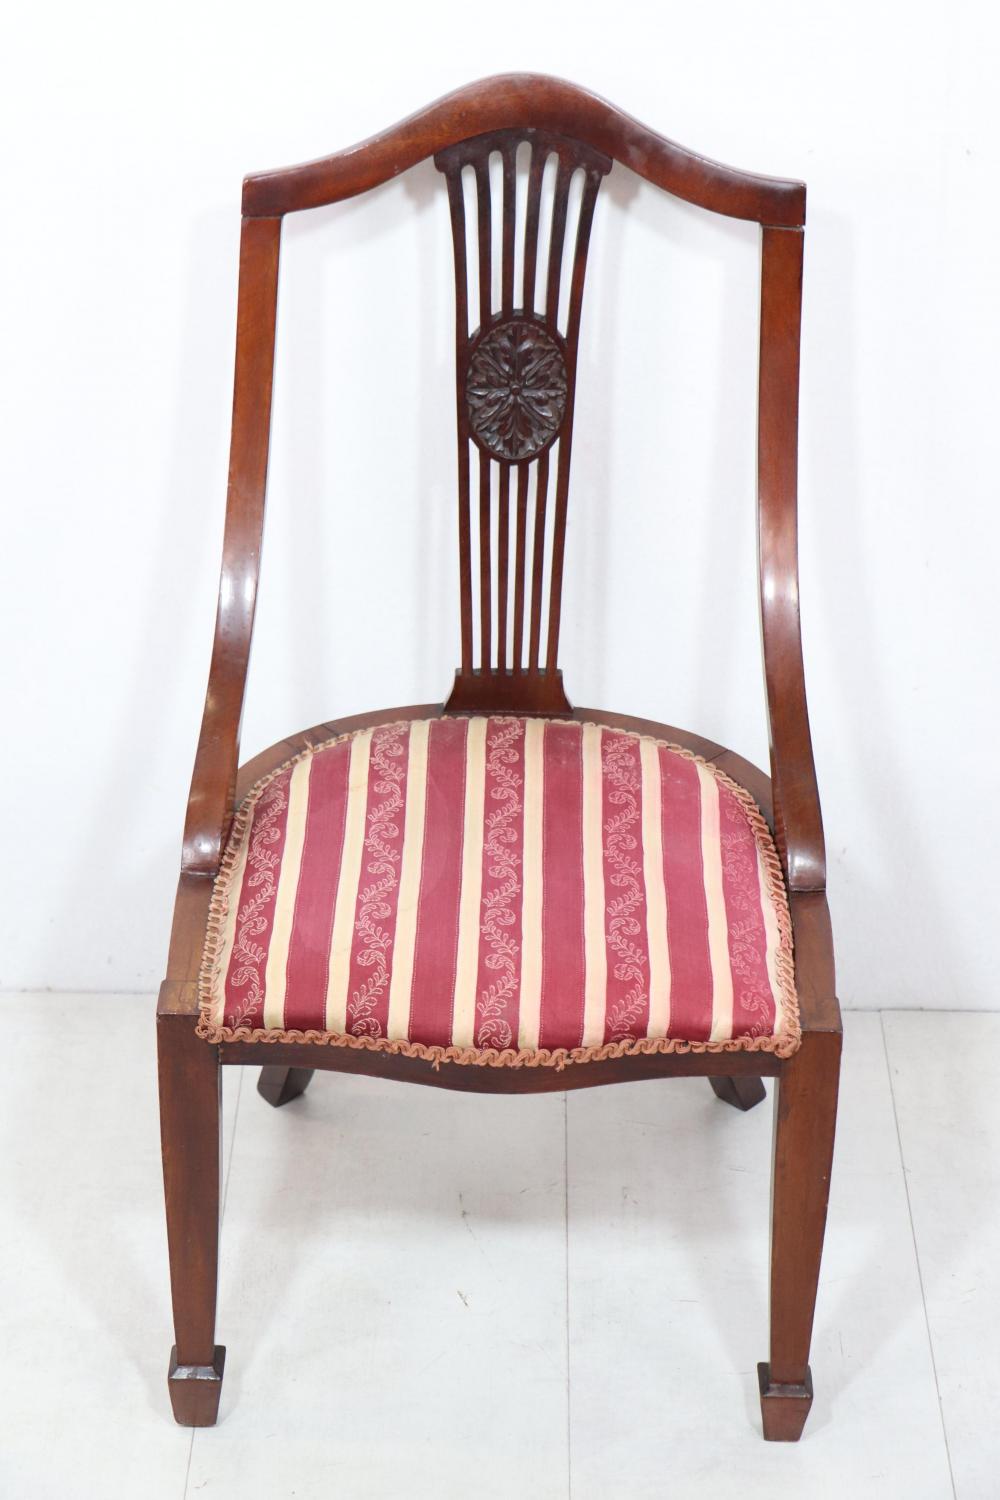 Englischer Single Chair im Edwardian Style, Mahagoni - sofort lieferbar